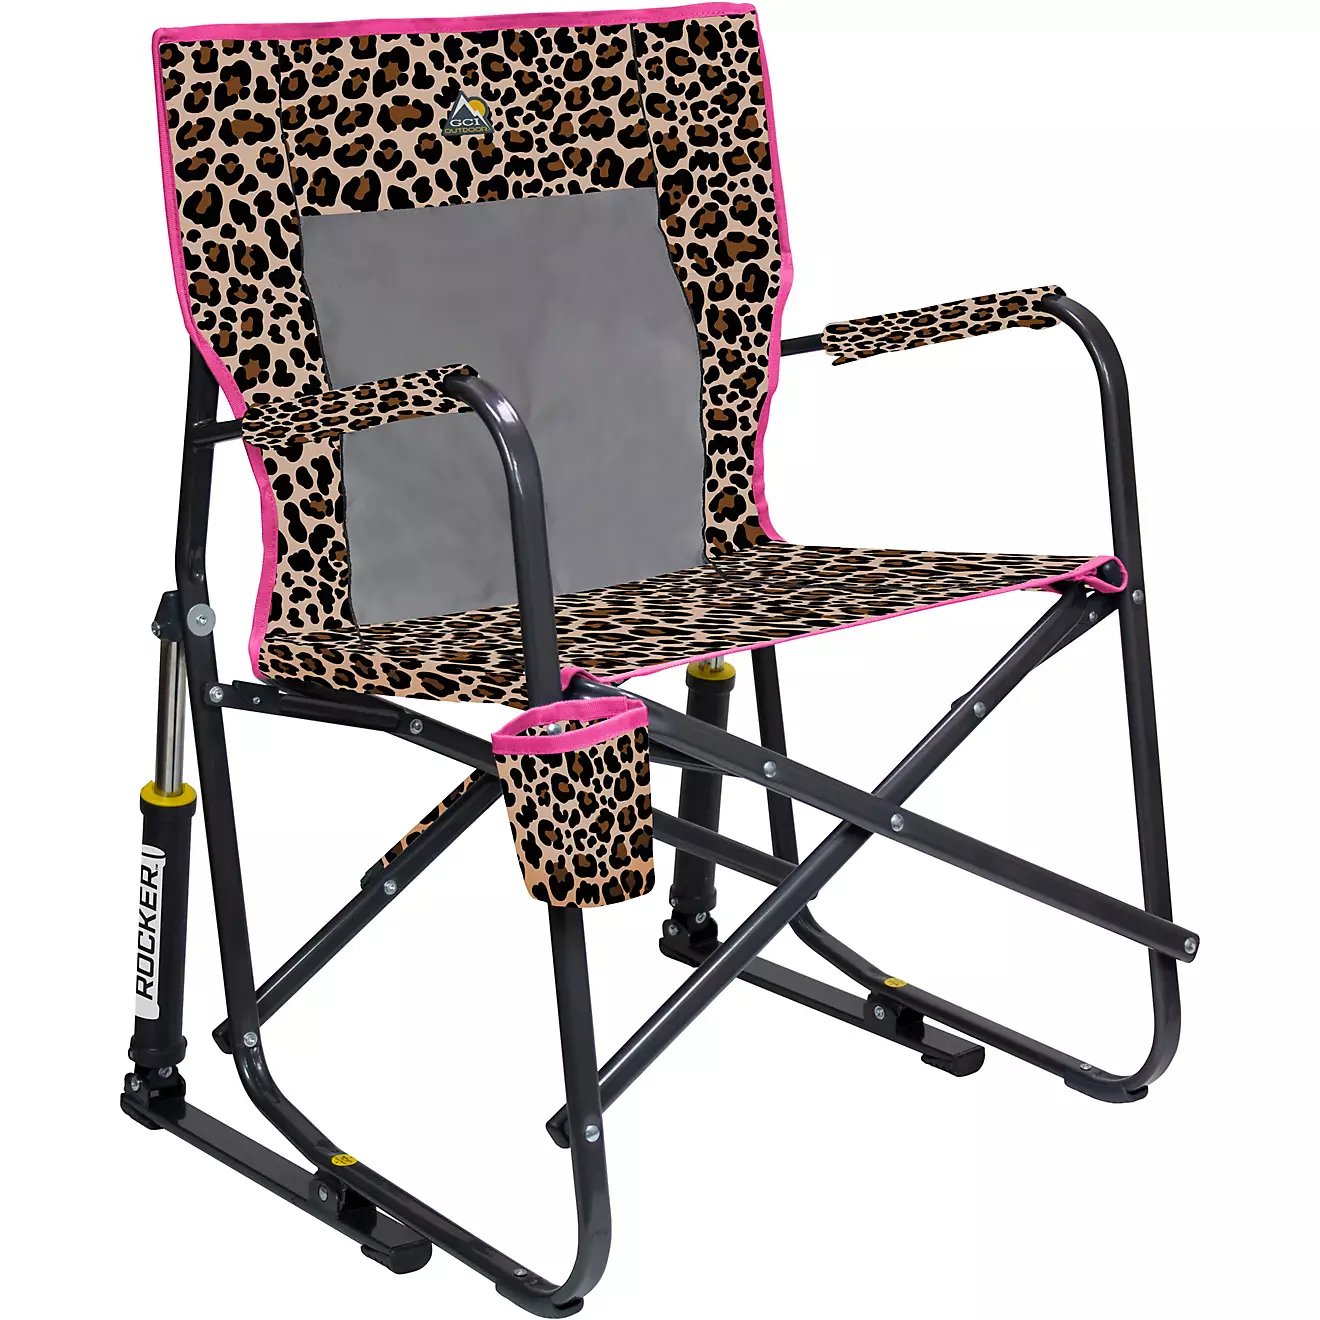 GCI Outdoor Cheetah Freestyle Rocker Chair Review - Worth It? - Seek ...